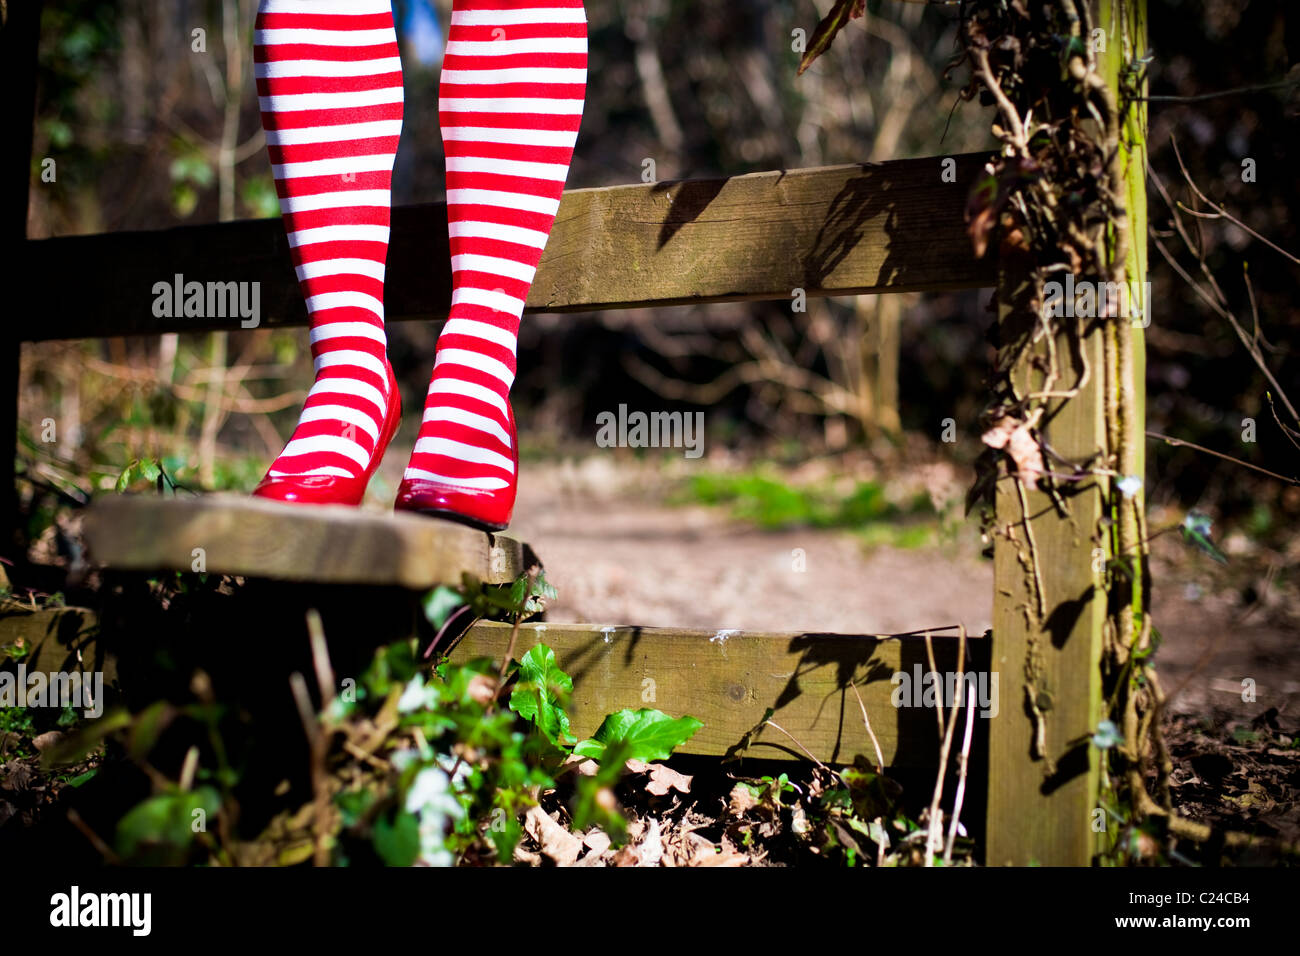 Woman wearing red stripy socks Stock Photo